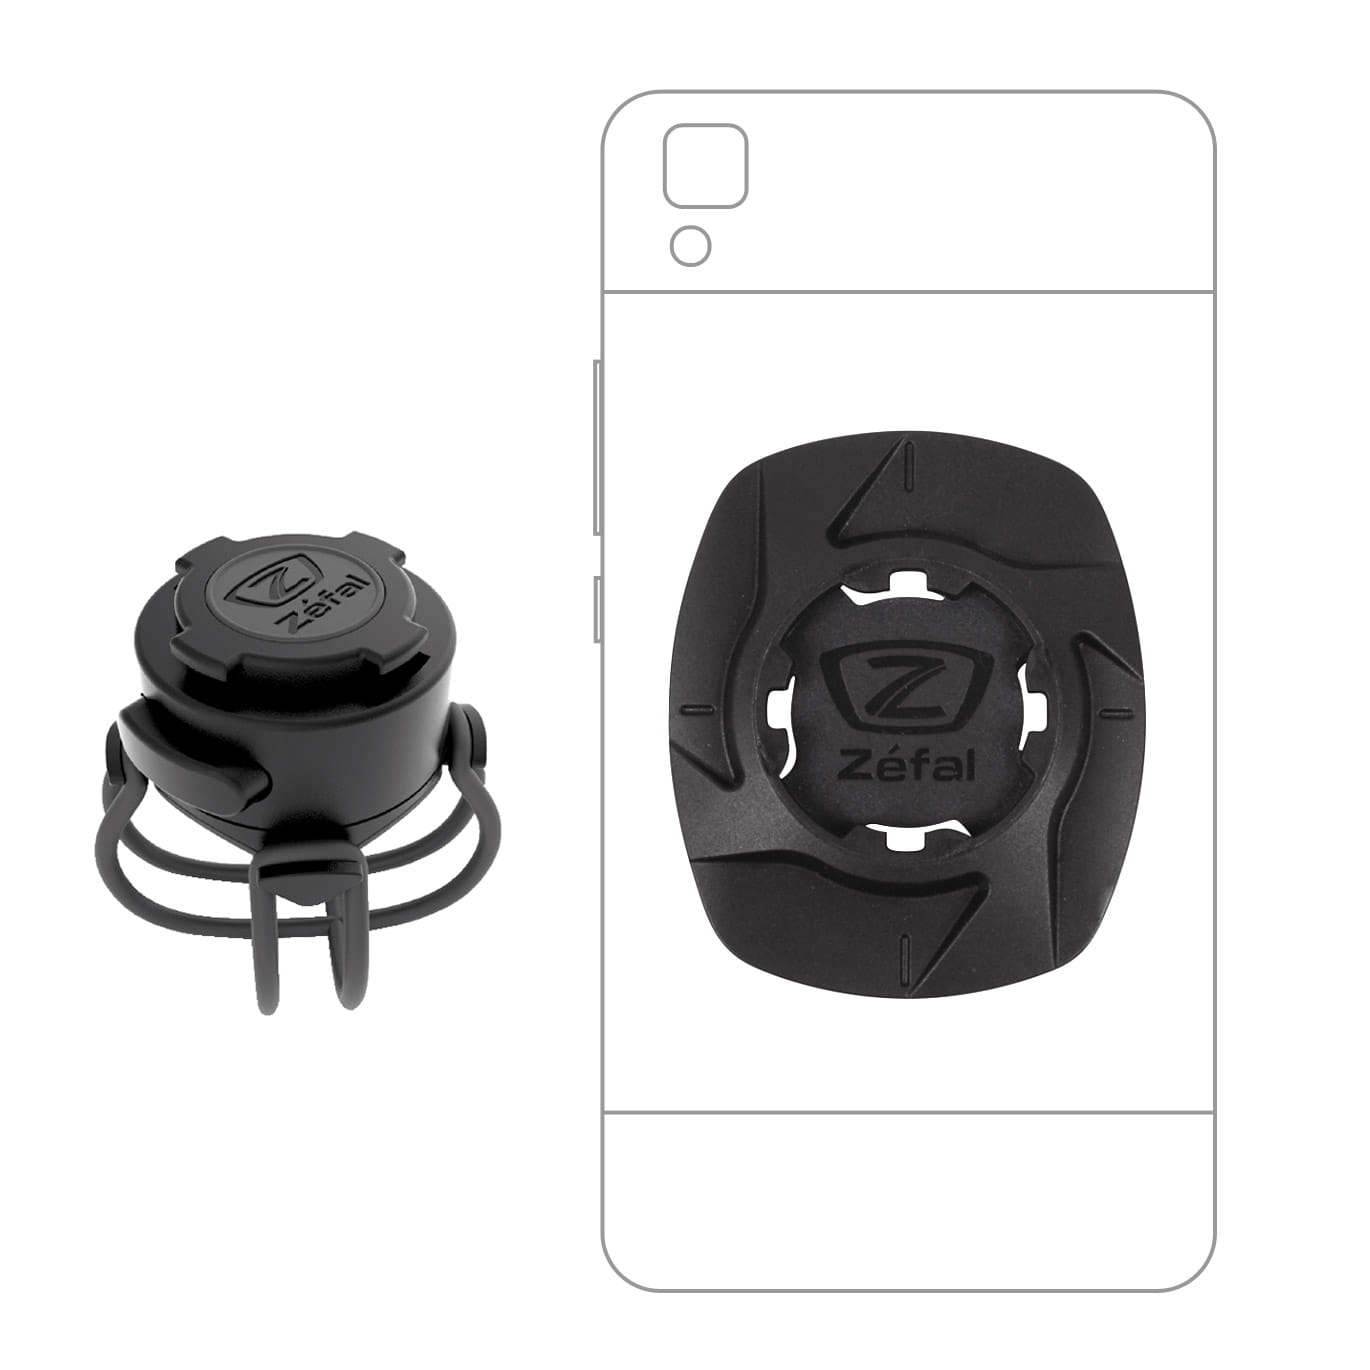 Zefal Bike Kit Universal Phone Adapter + Z Bike Mount Halterung